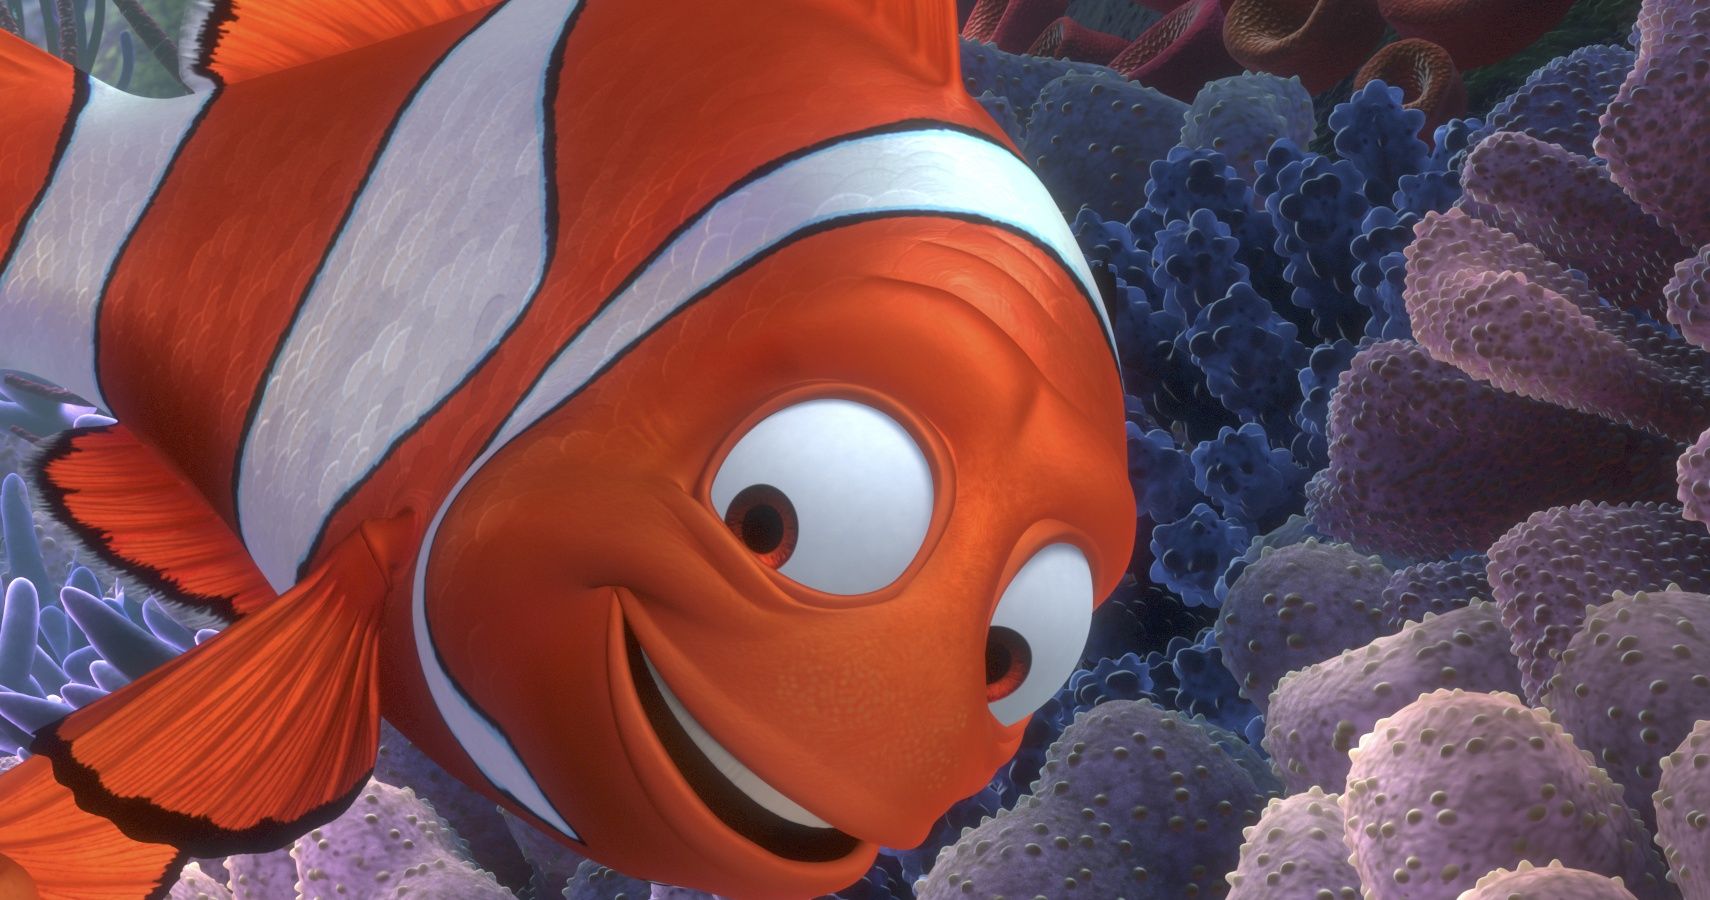 Marlin in Finding Nemo.